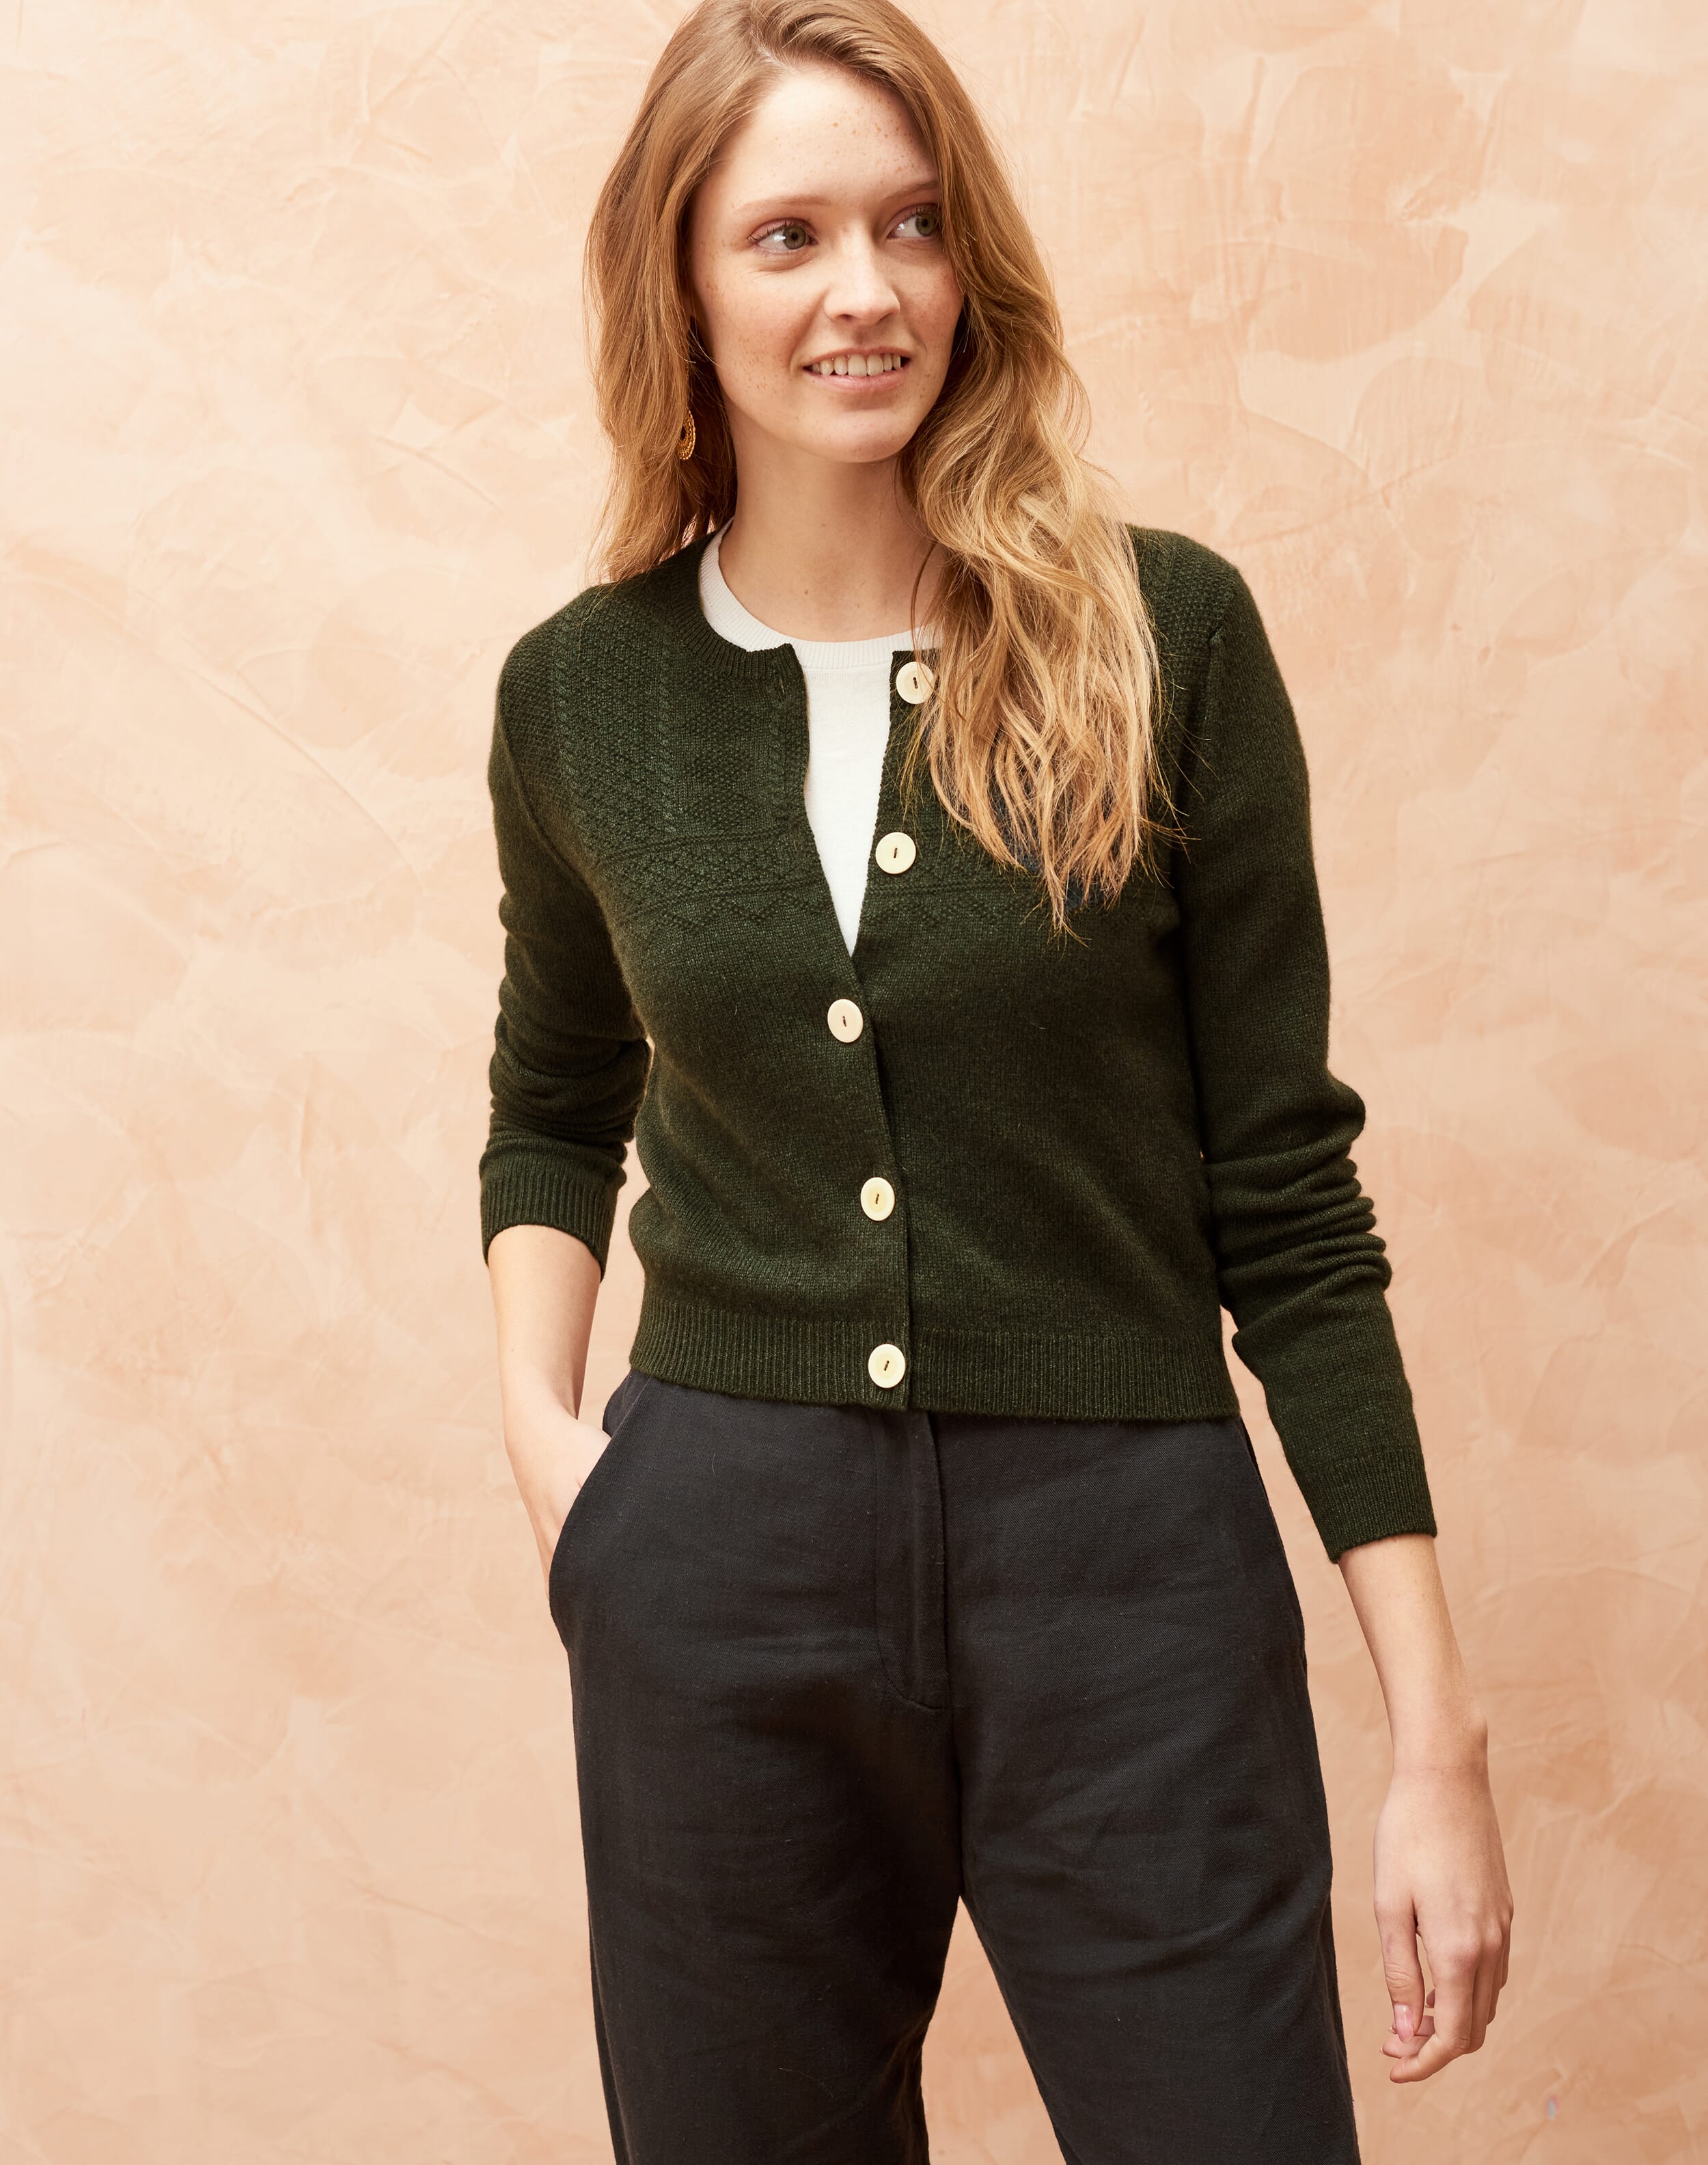 Scottish Cashmere Guernsey Cardigan in Sorrel | Womenswear | Brora